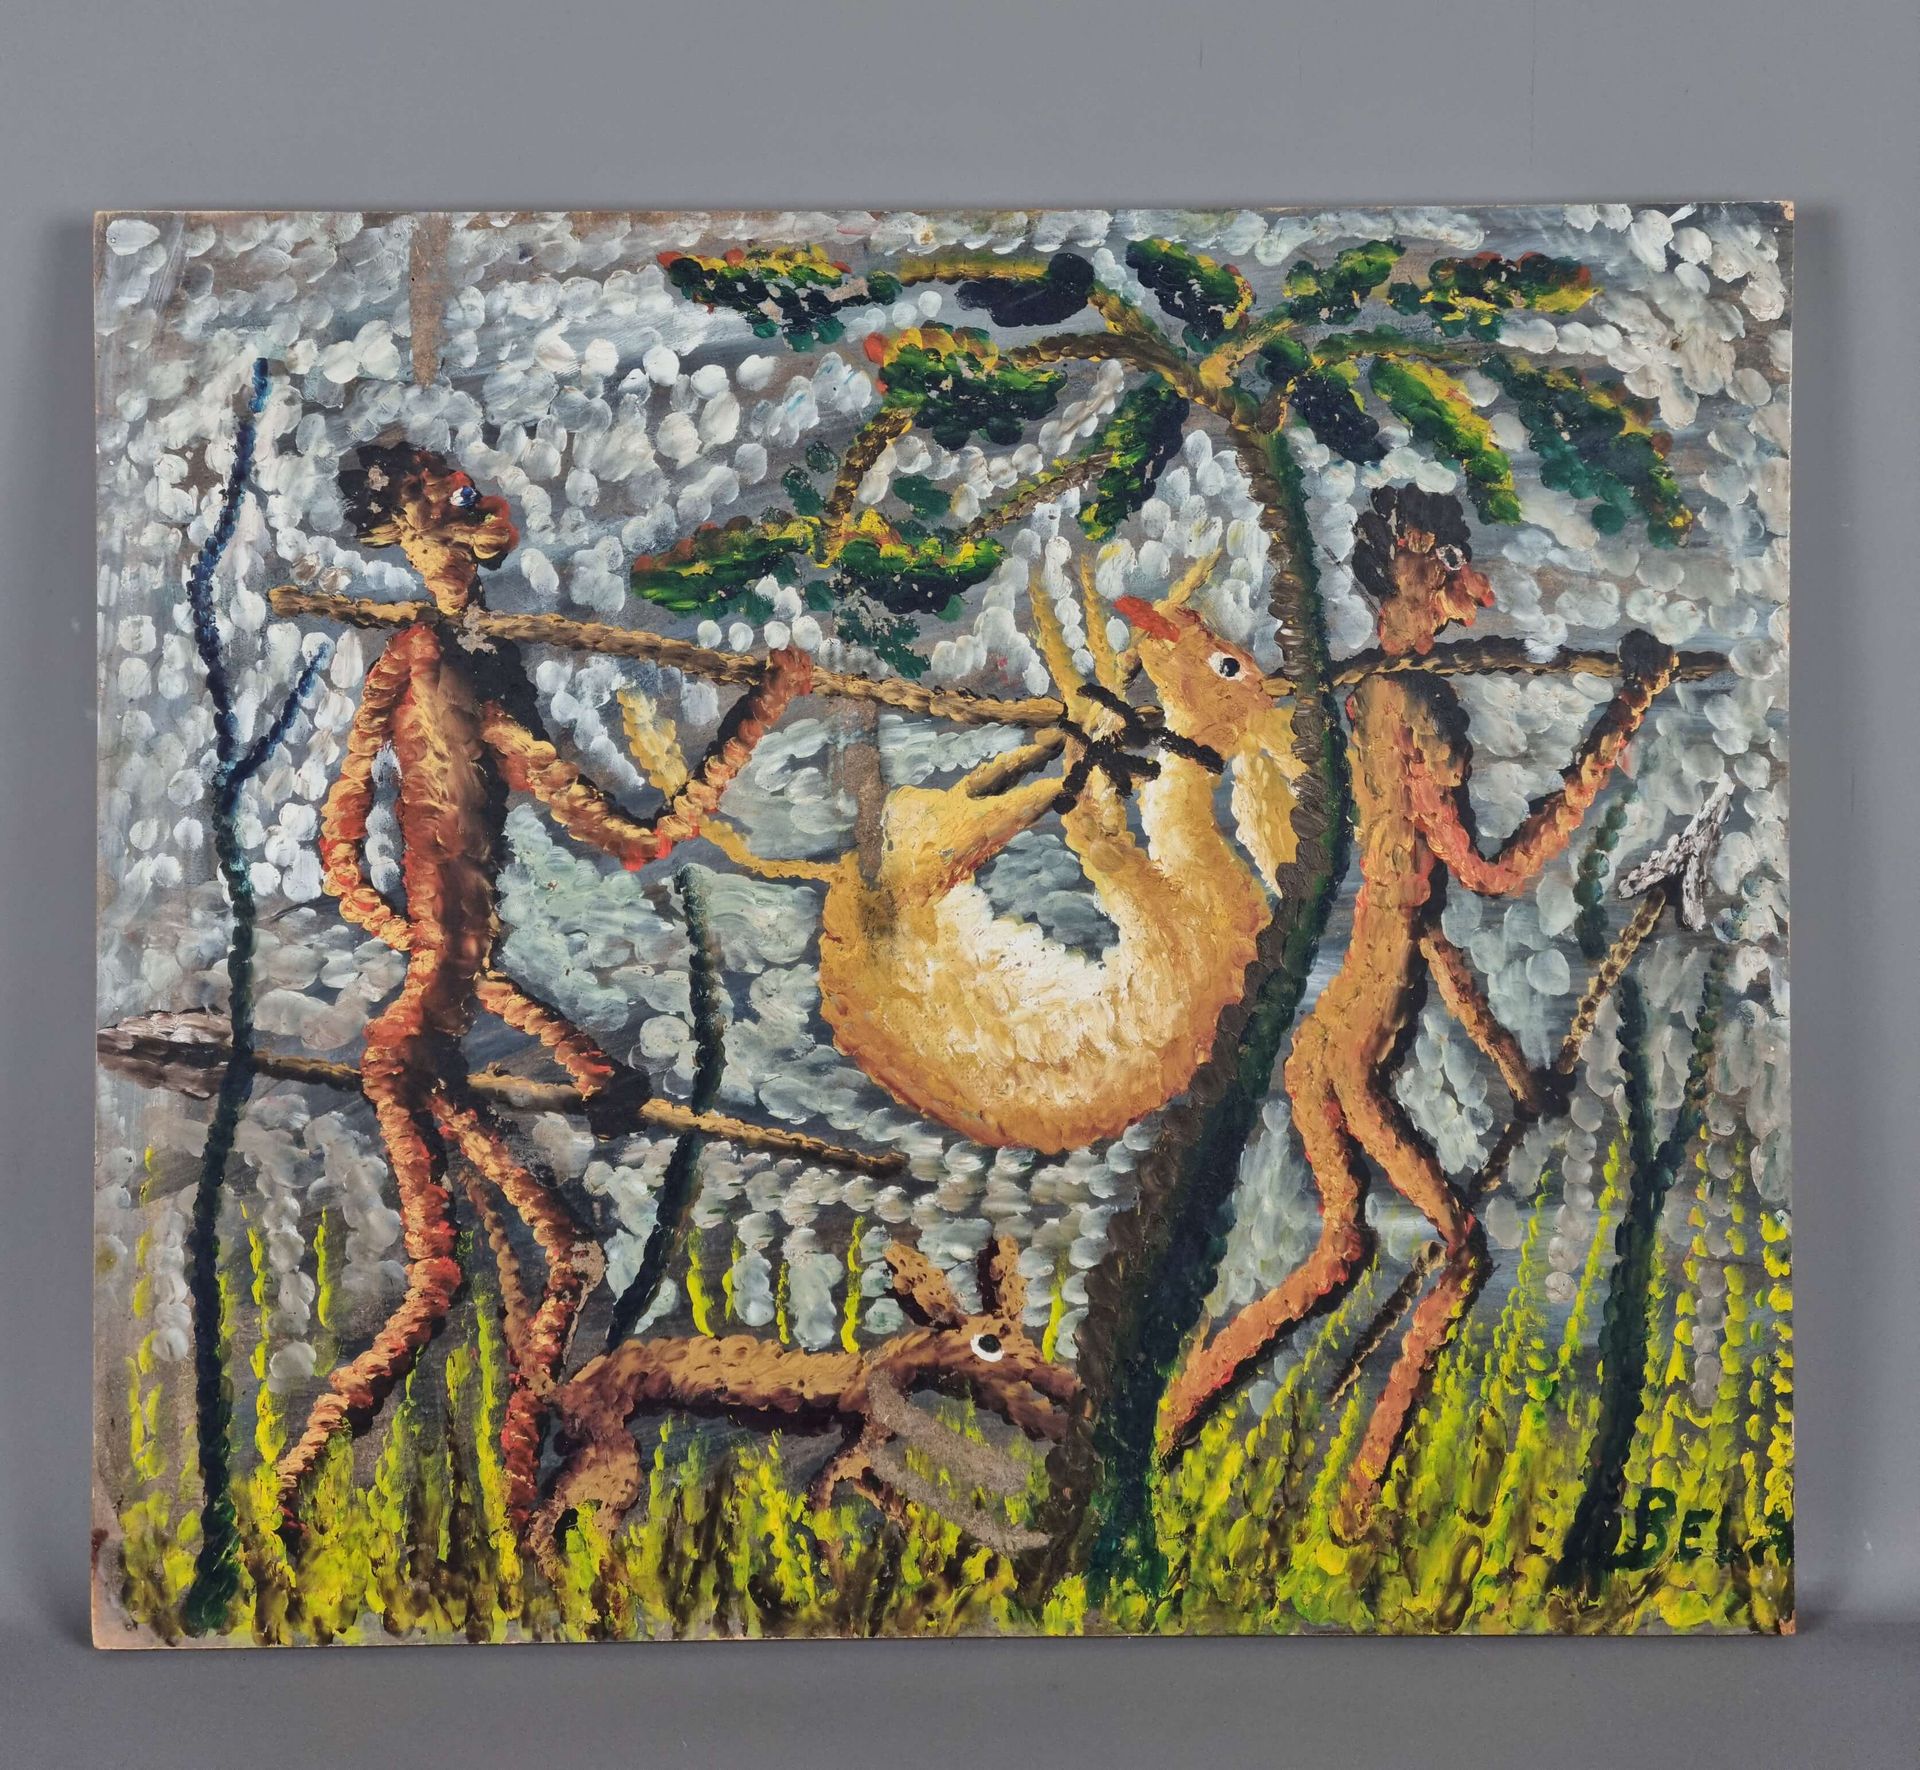 BELA (1940-1968) 签名为Bela "Retour de chasse "的单色油画。出处：作品由家族在刚果获得。50x60厘米